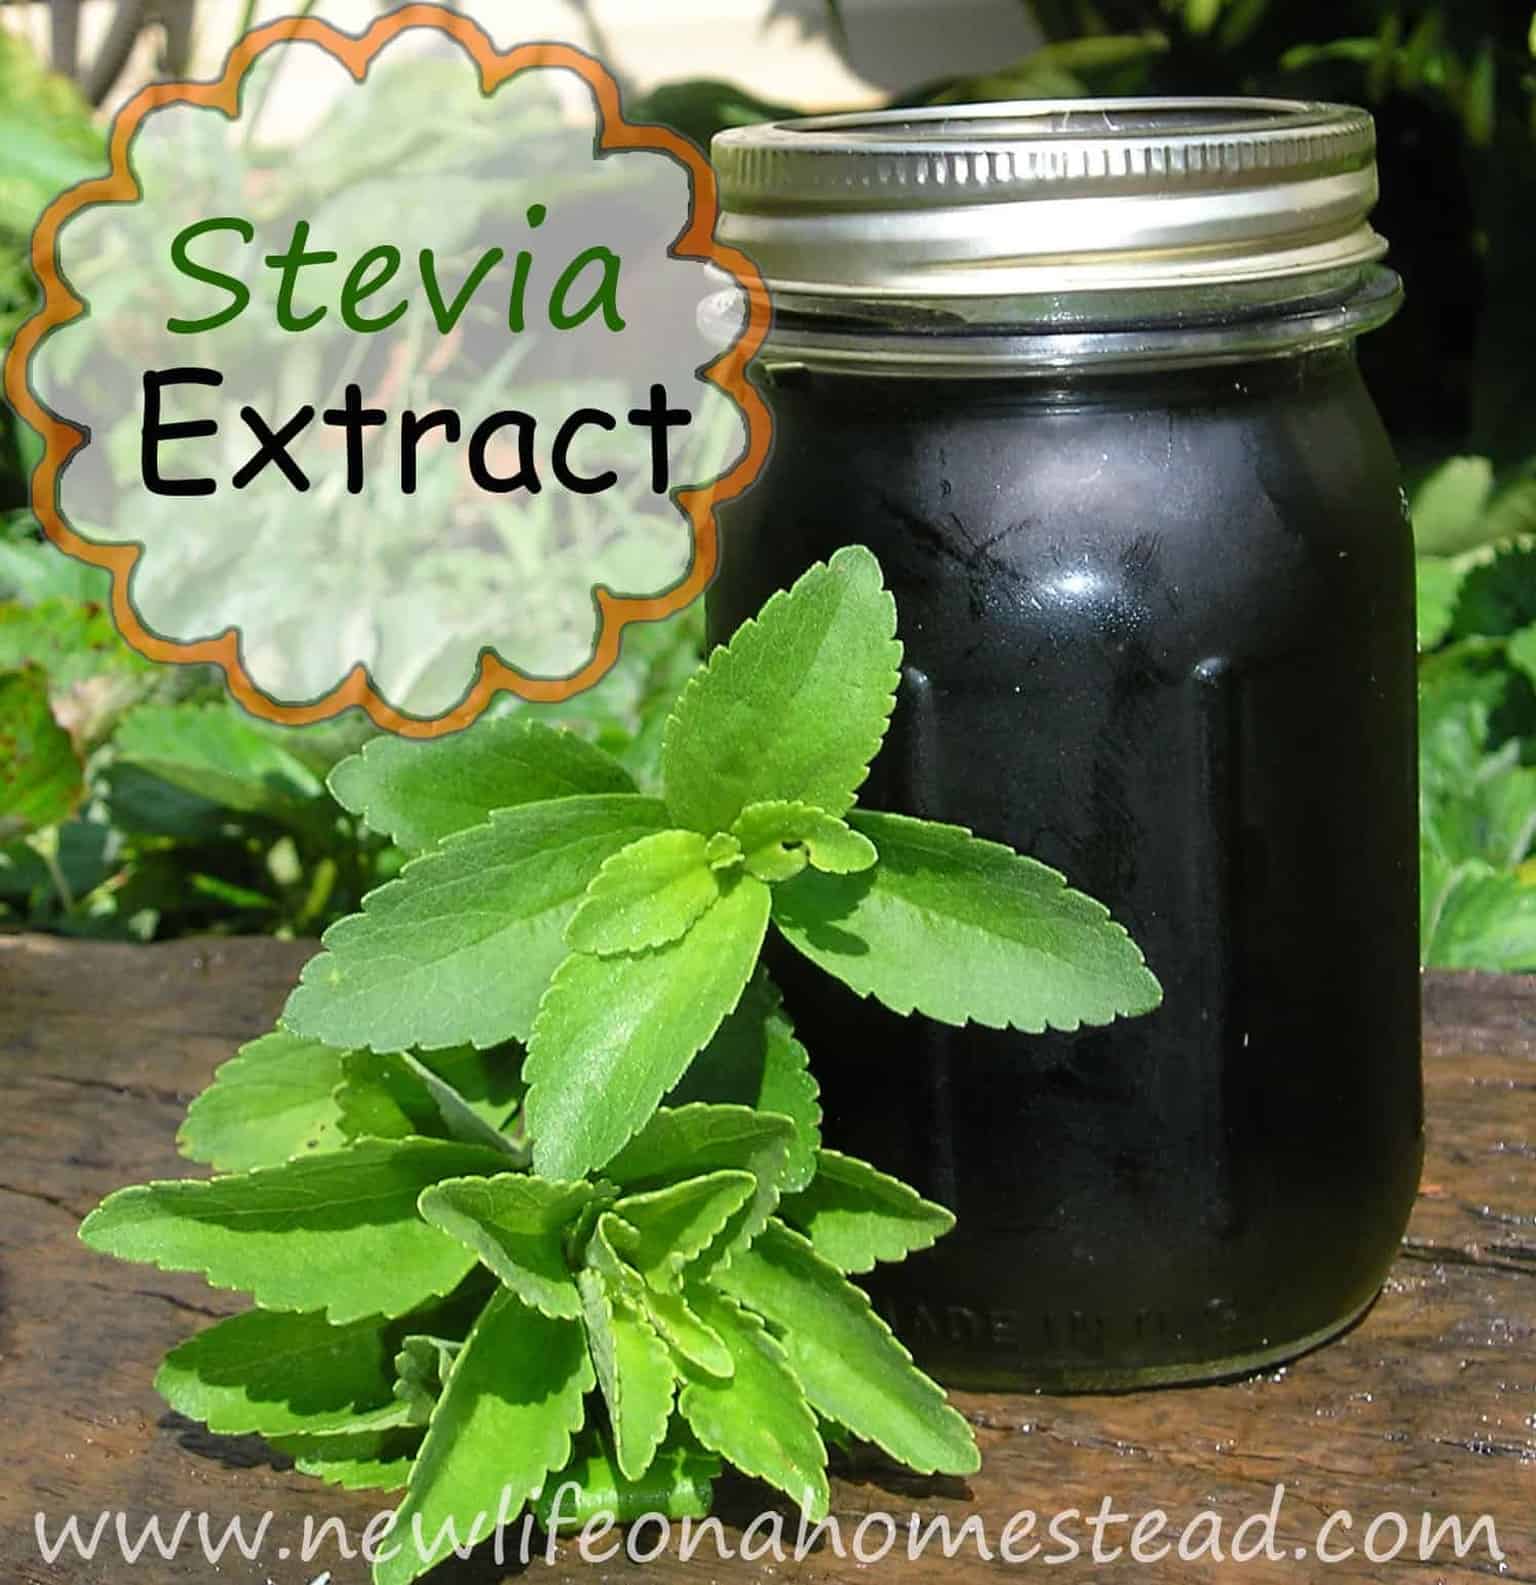 stevia extract in jar next to stevia plant